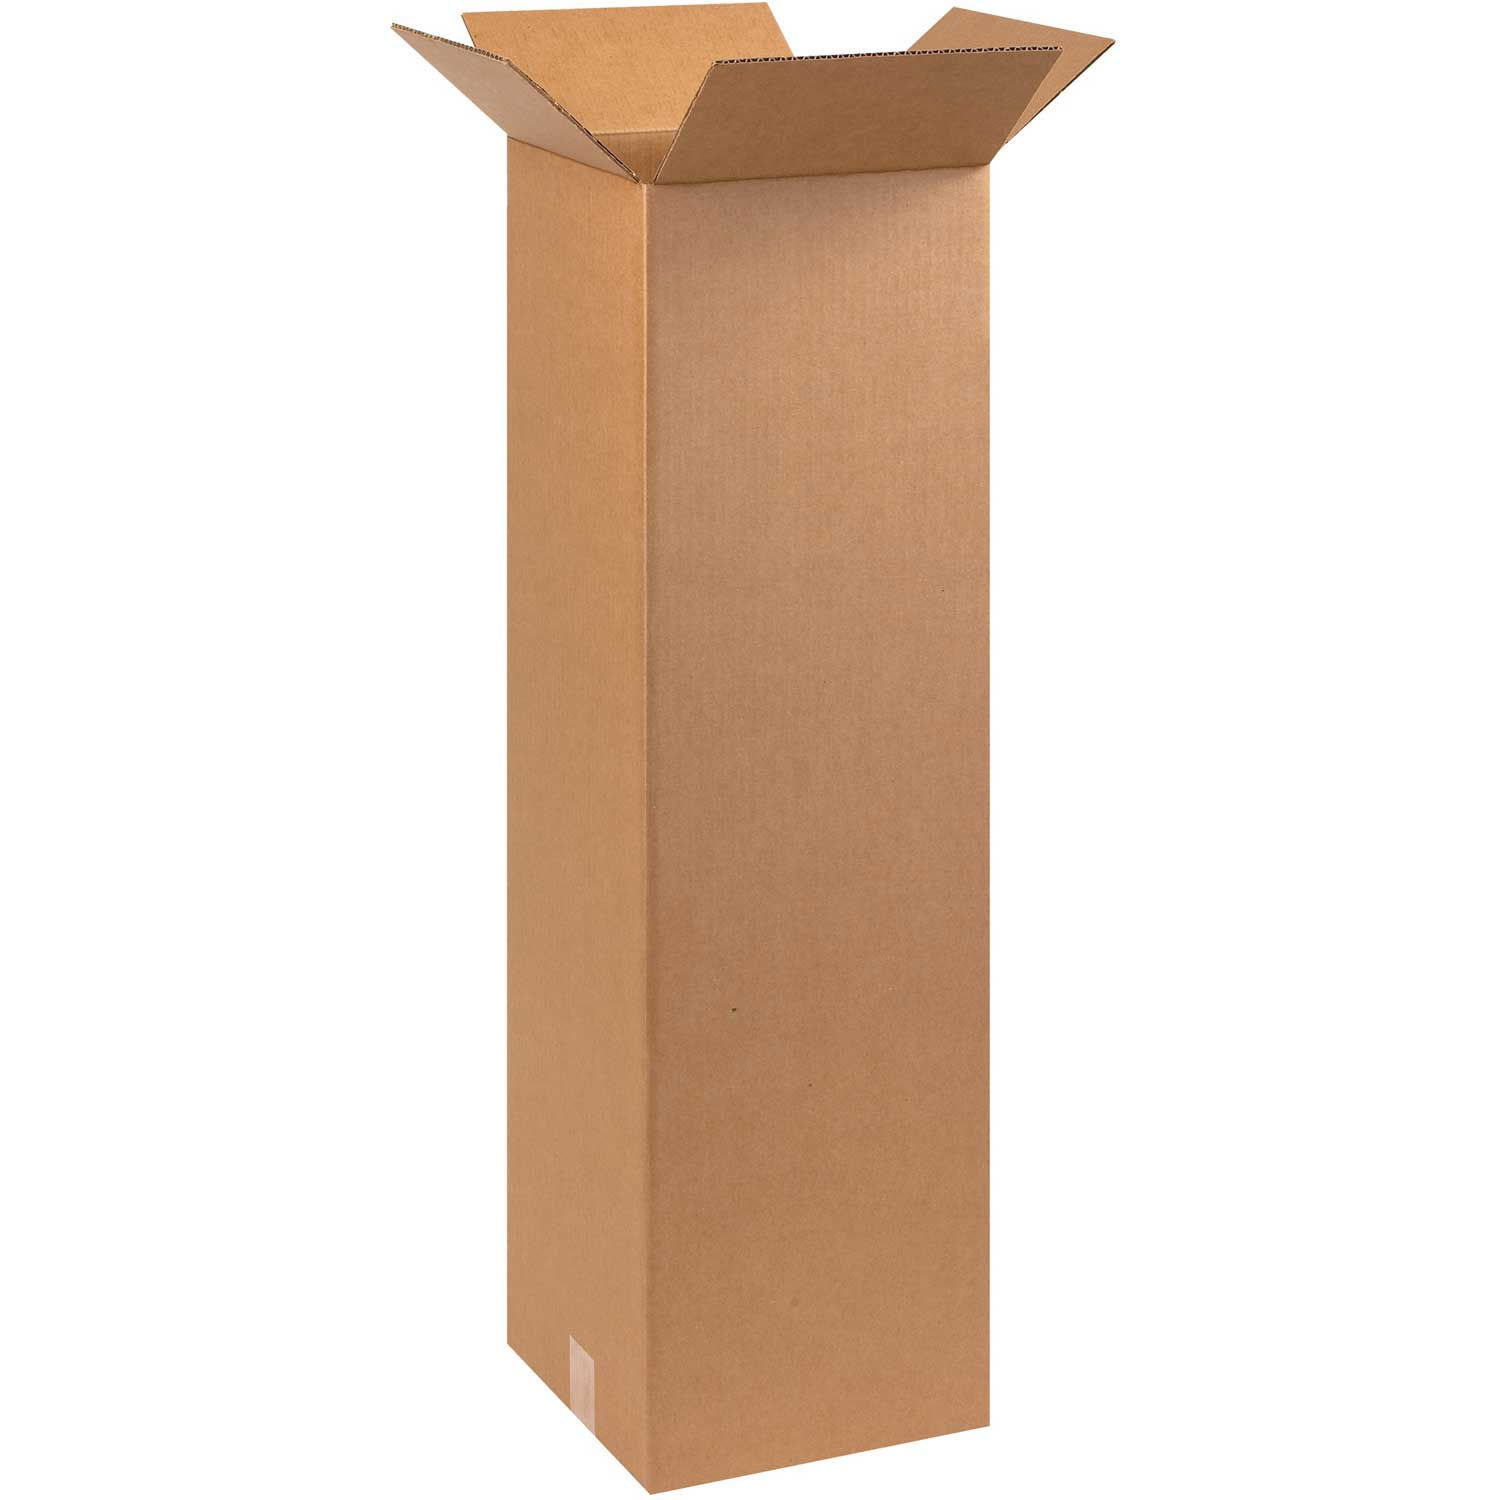 10 x 10 x 4 Flat Cardboard Corrugated Boxes 65 lbs Capacity 200#/ECT-32 25-Pack